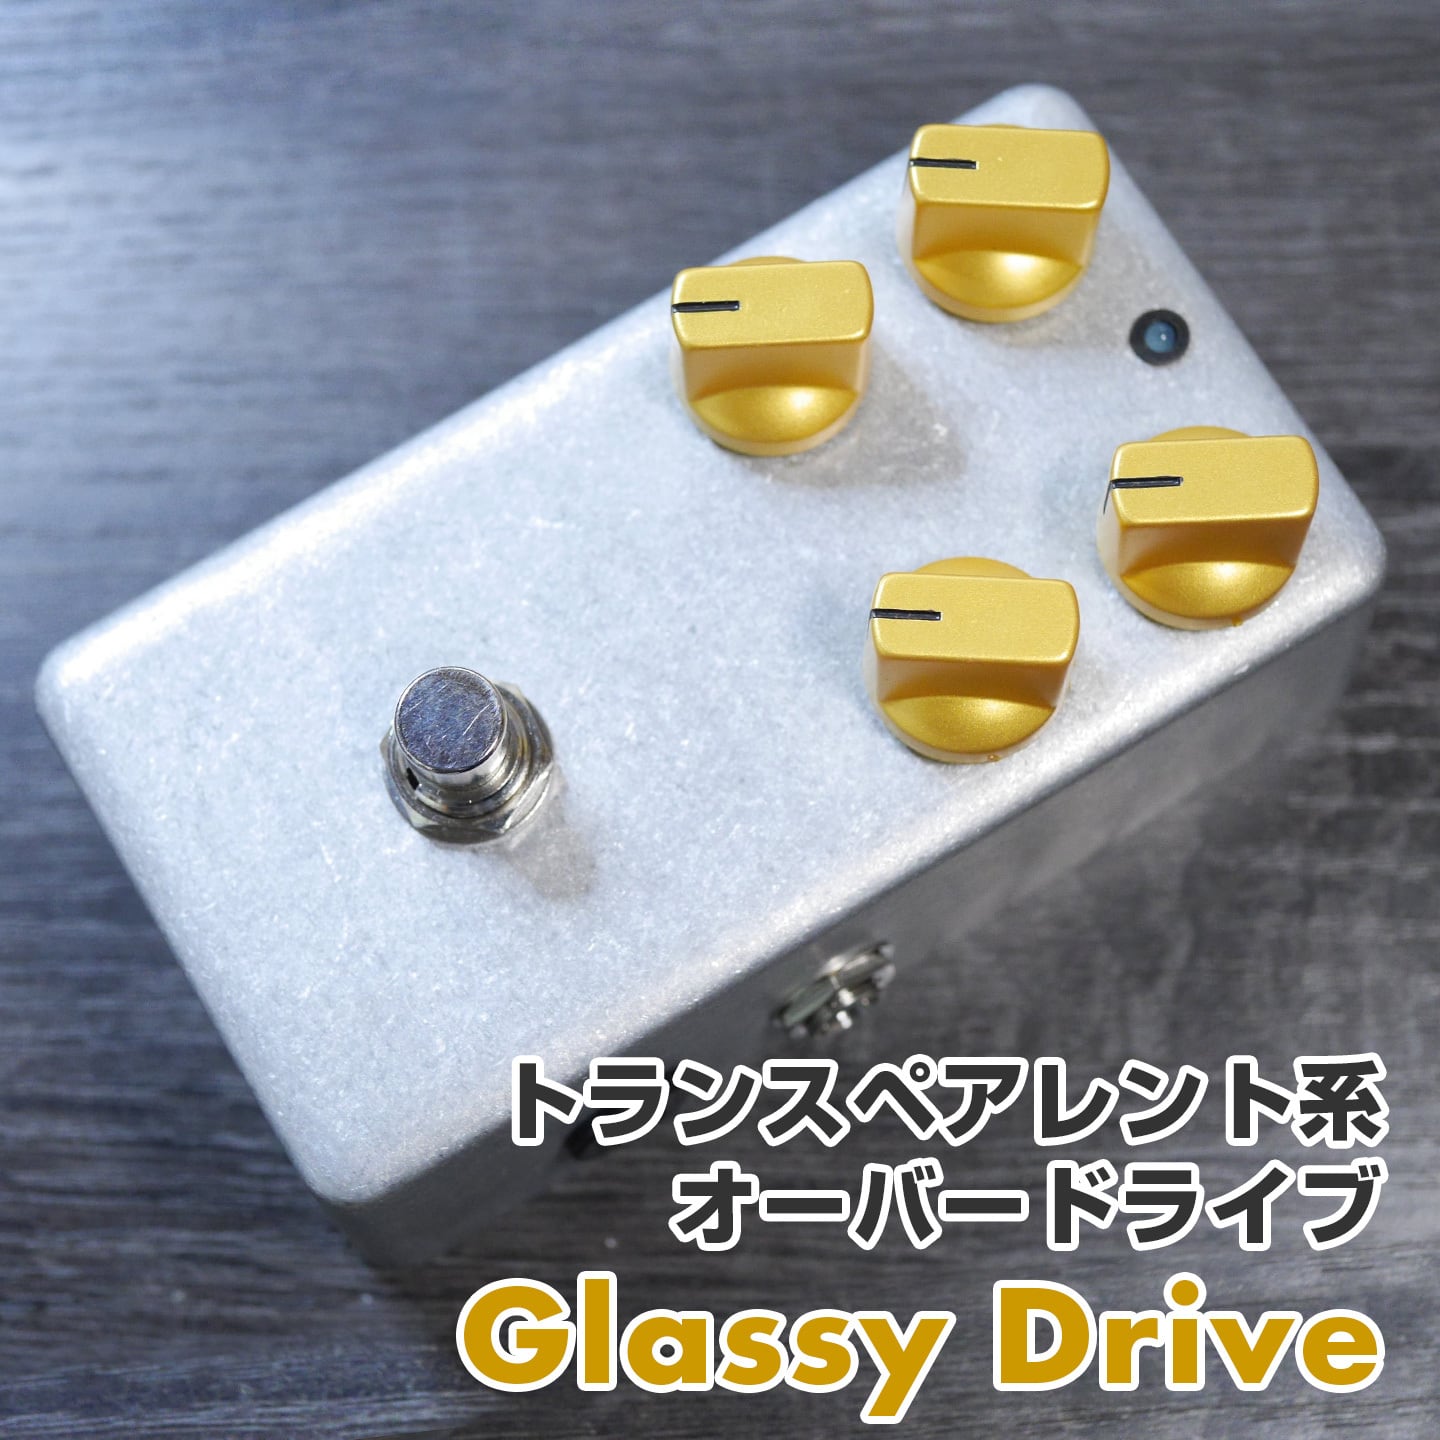 Glassy Drive"Glassy Drive" トランスペアレント系オーバードライブ 《AL STANDARD》